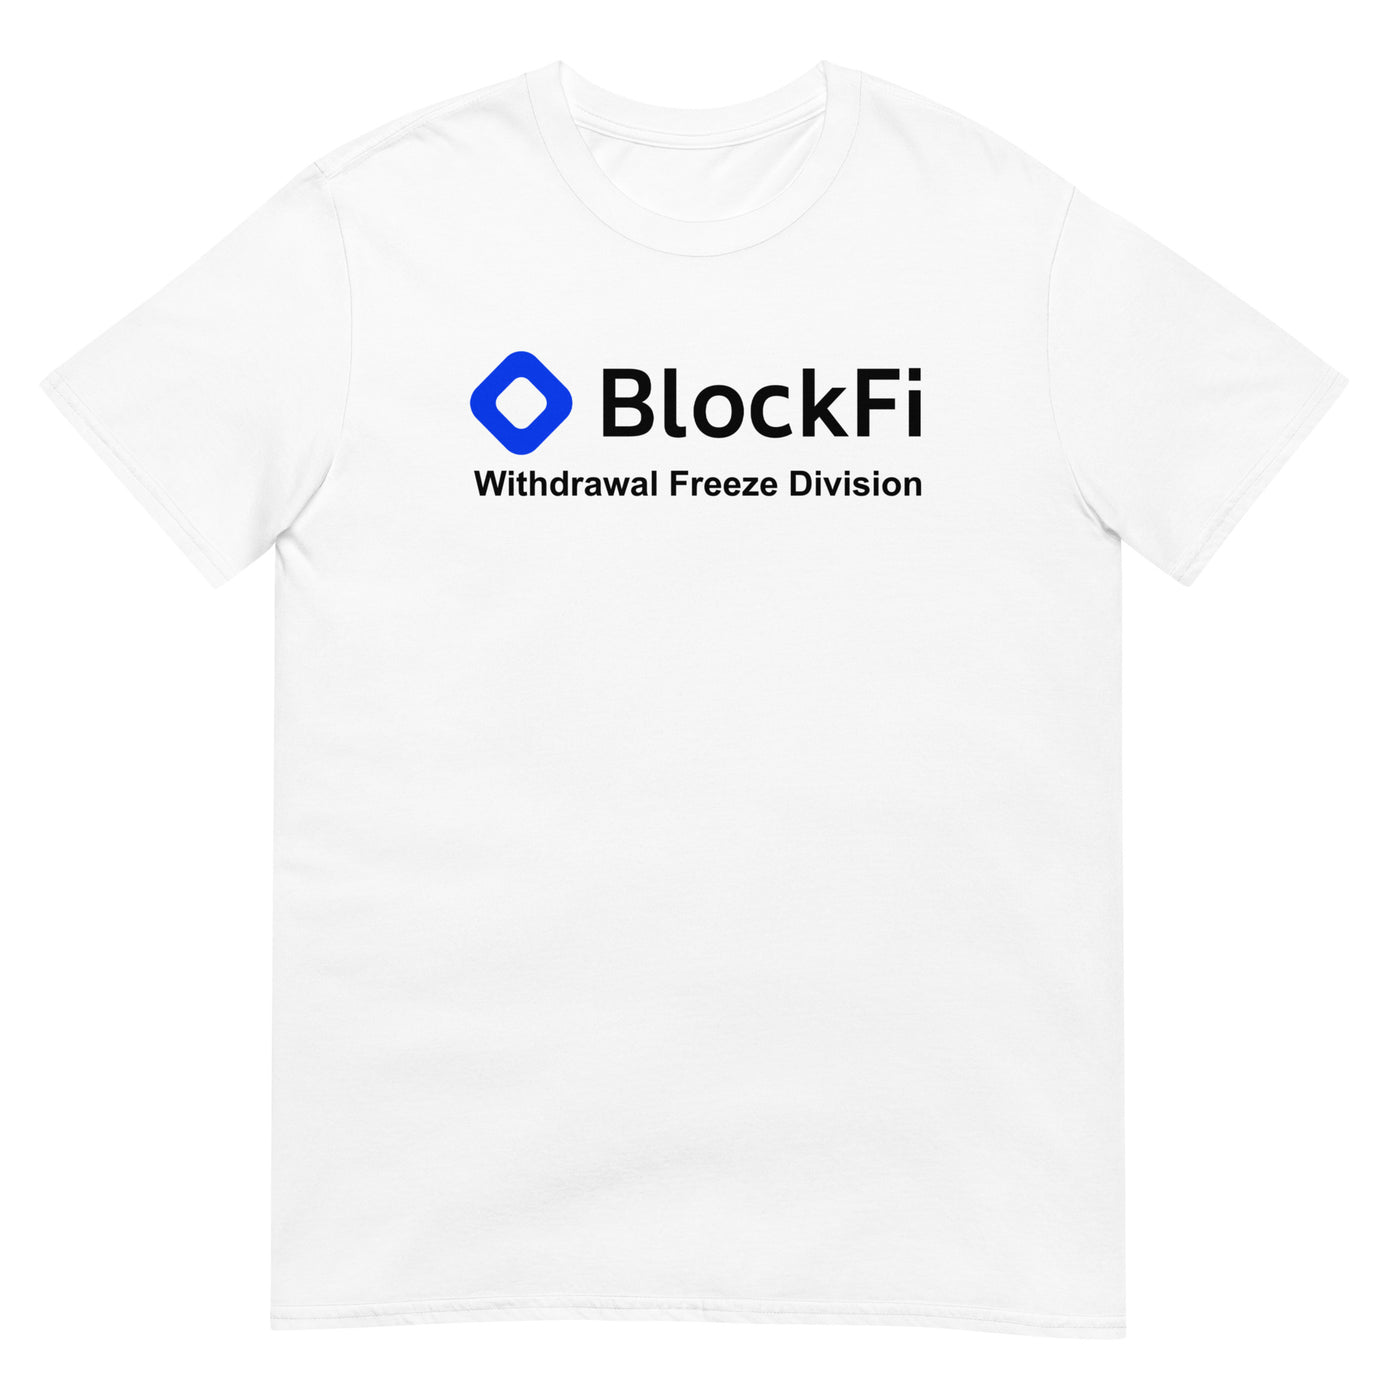 BlockFi Withdrawal Freeze Division - Arbitrage Andy